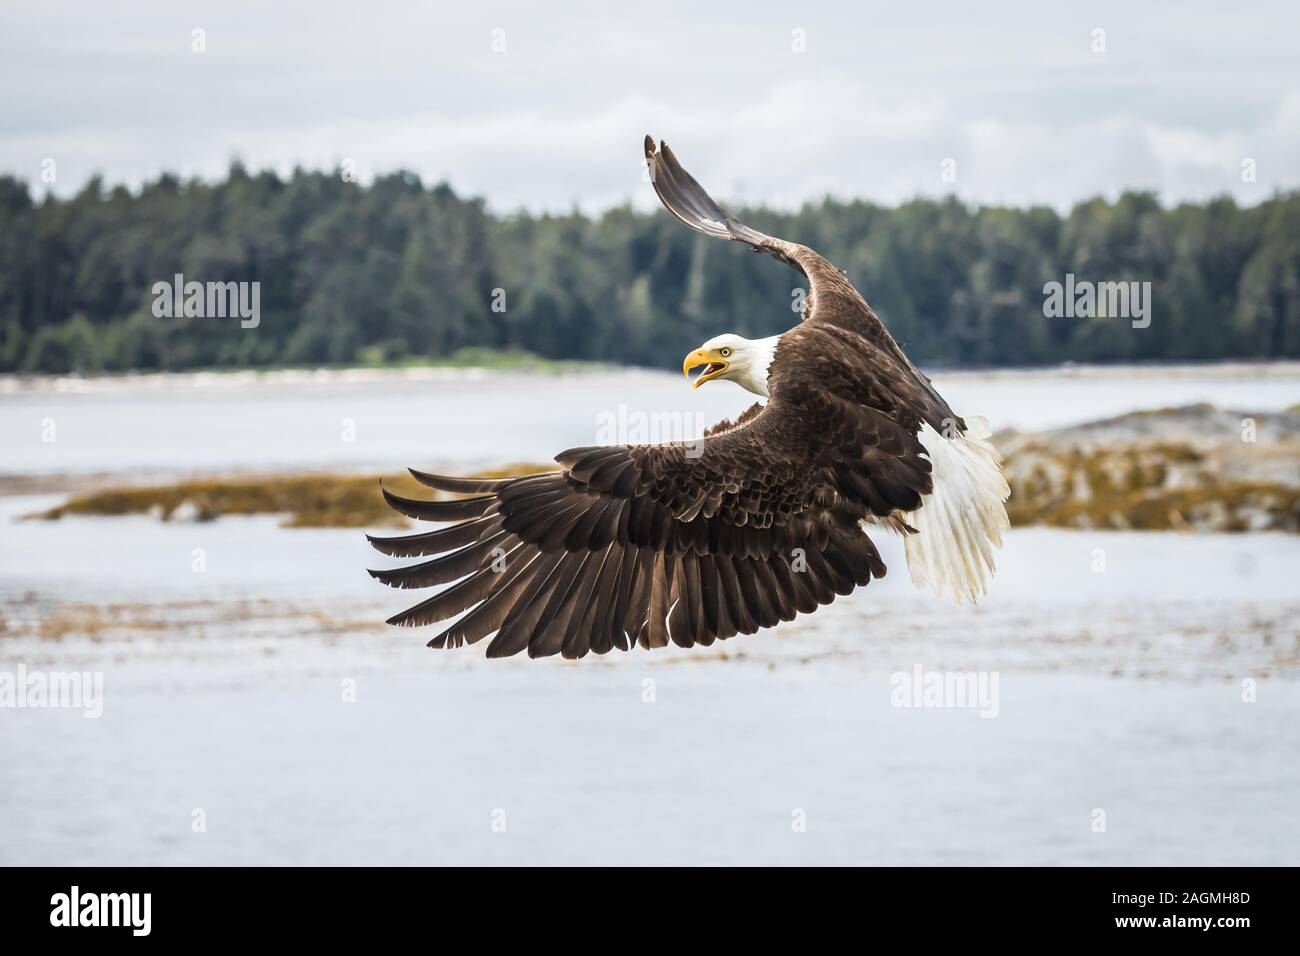 Canadian Bald Eagle (haliaeetus leucocephalus) flying in its habitat with open wings Stock Photo